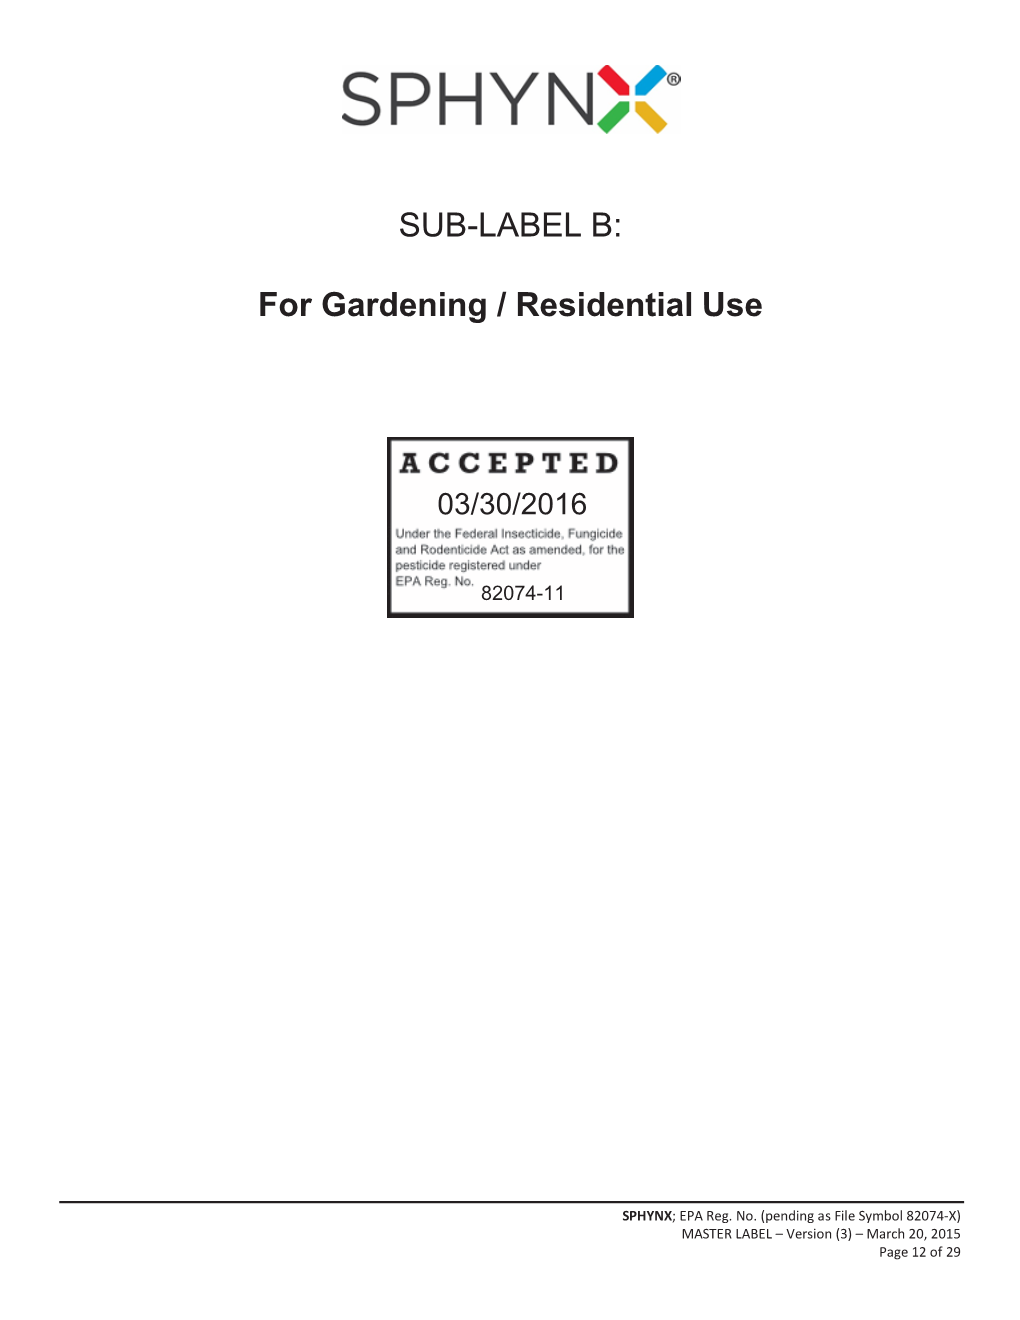 For Gardening / Residential Use